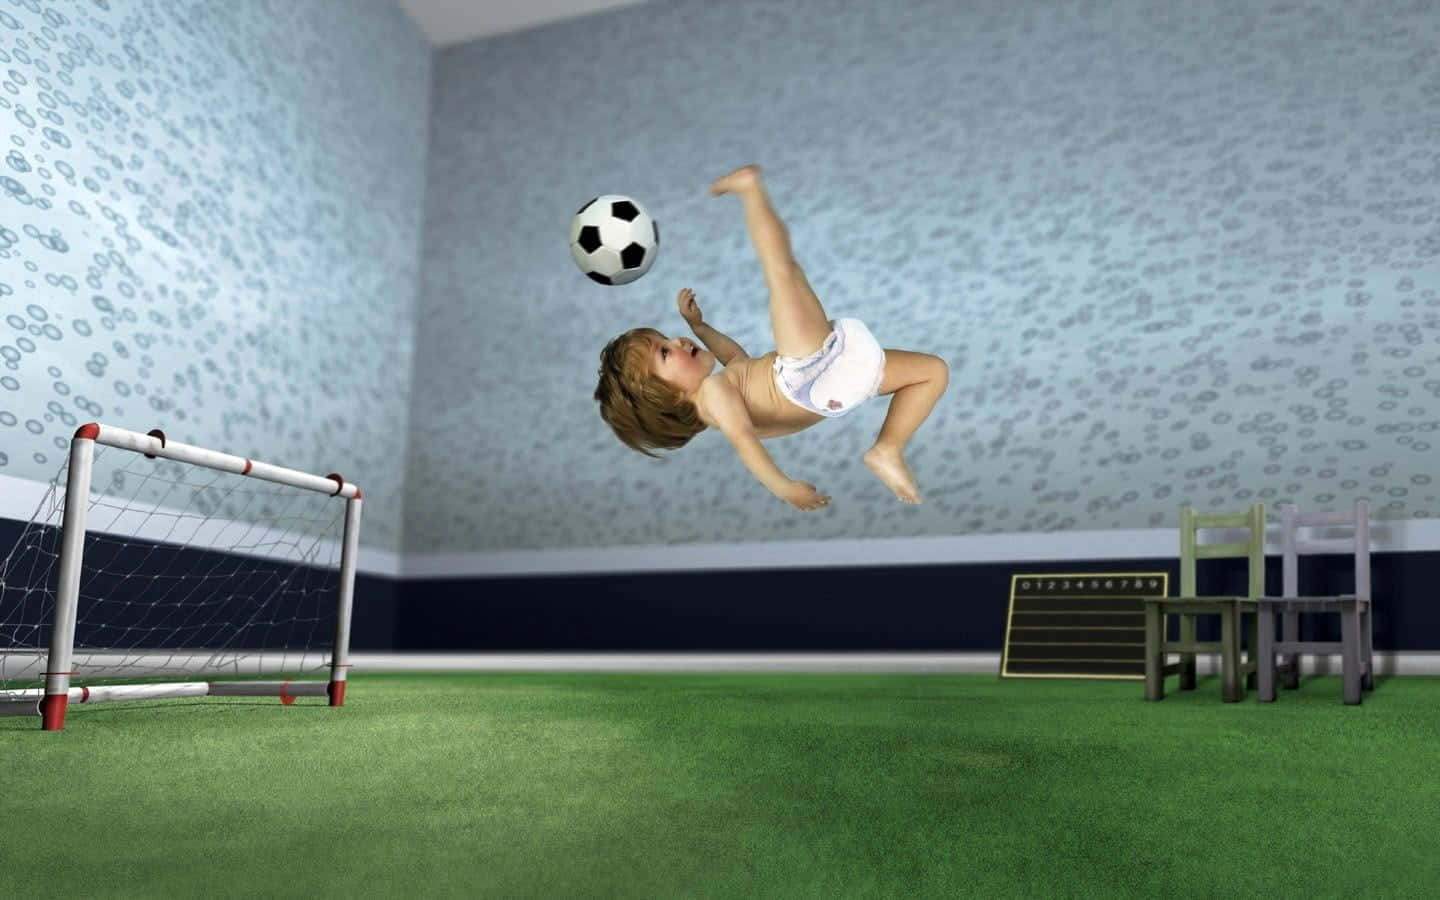 A Girl Is Kicking A Soccer Ball